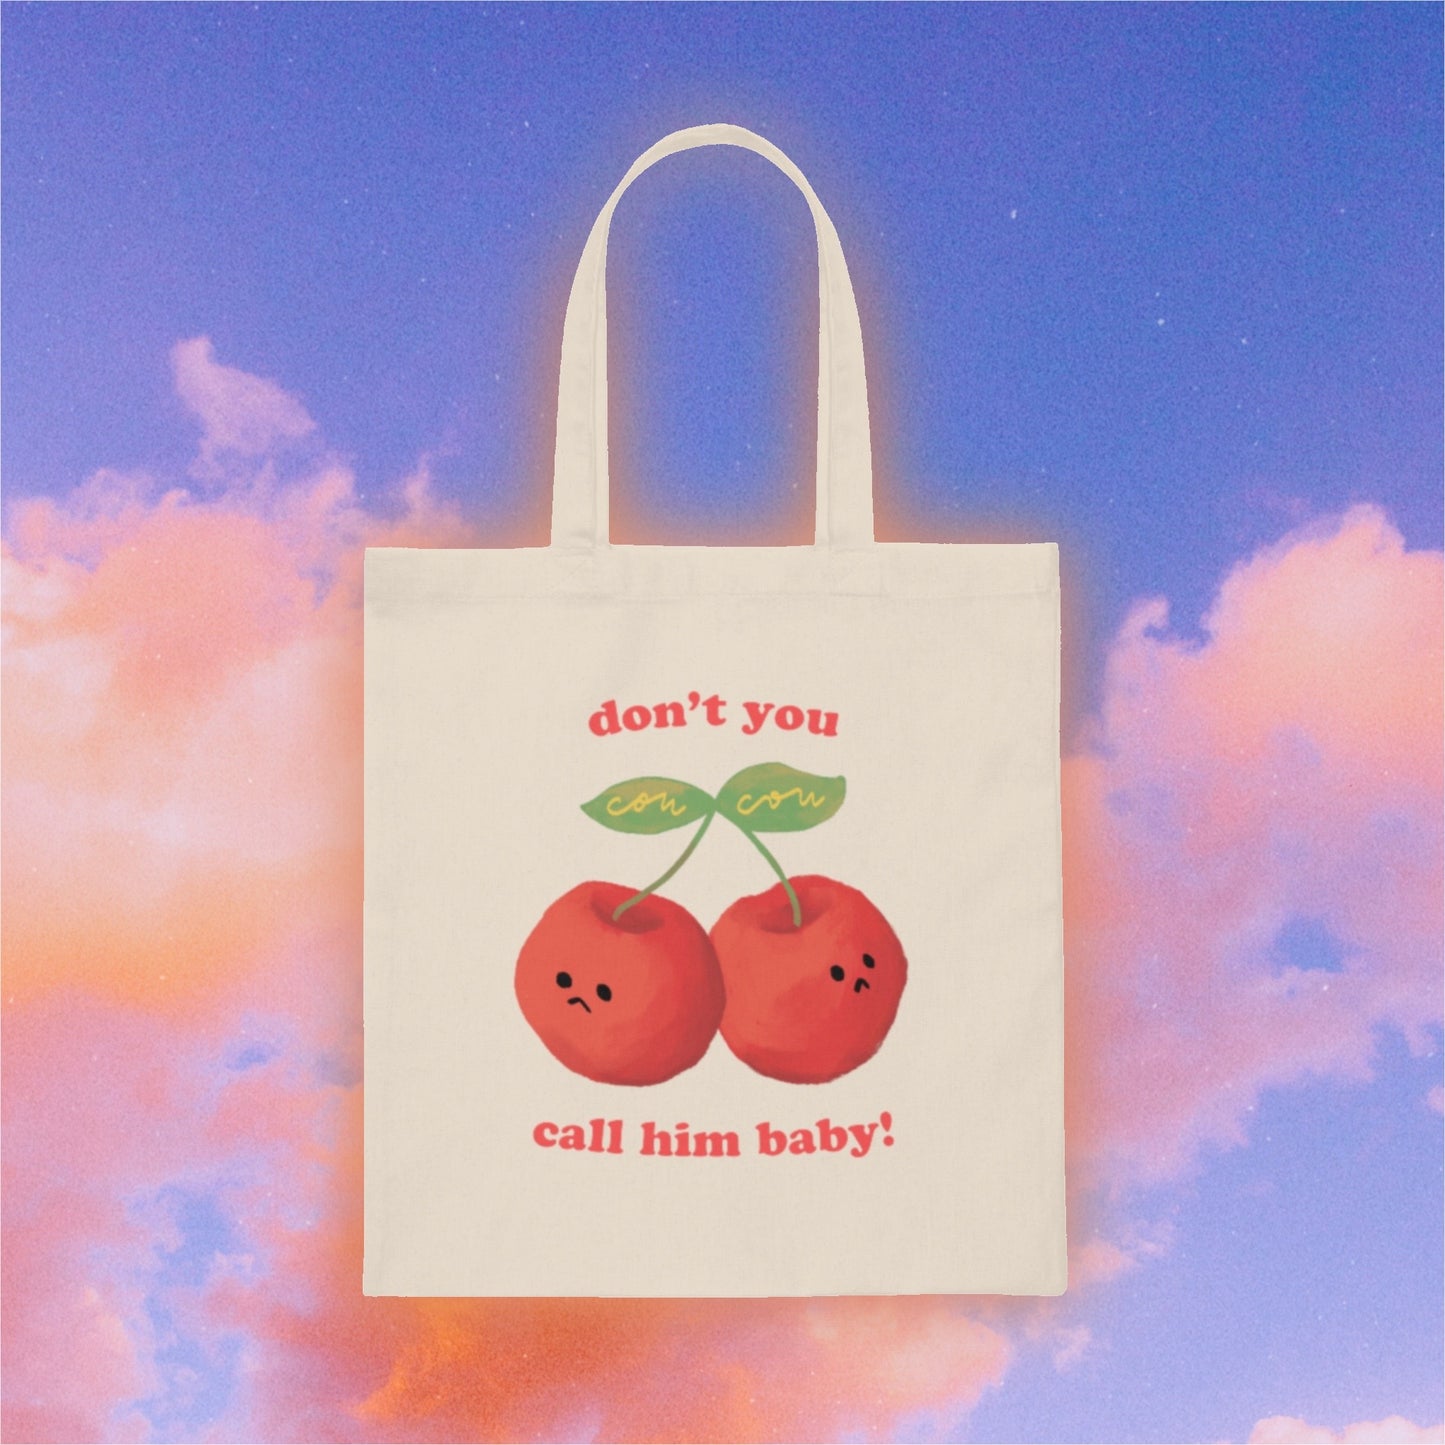 Cherry tote bag